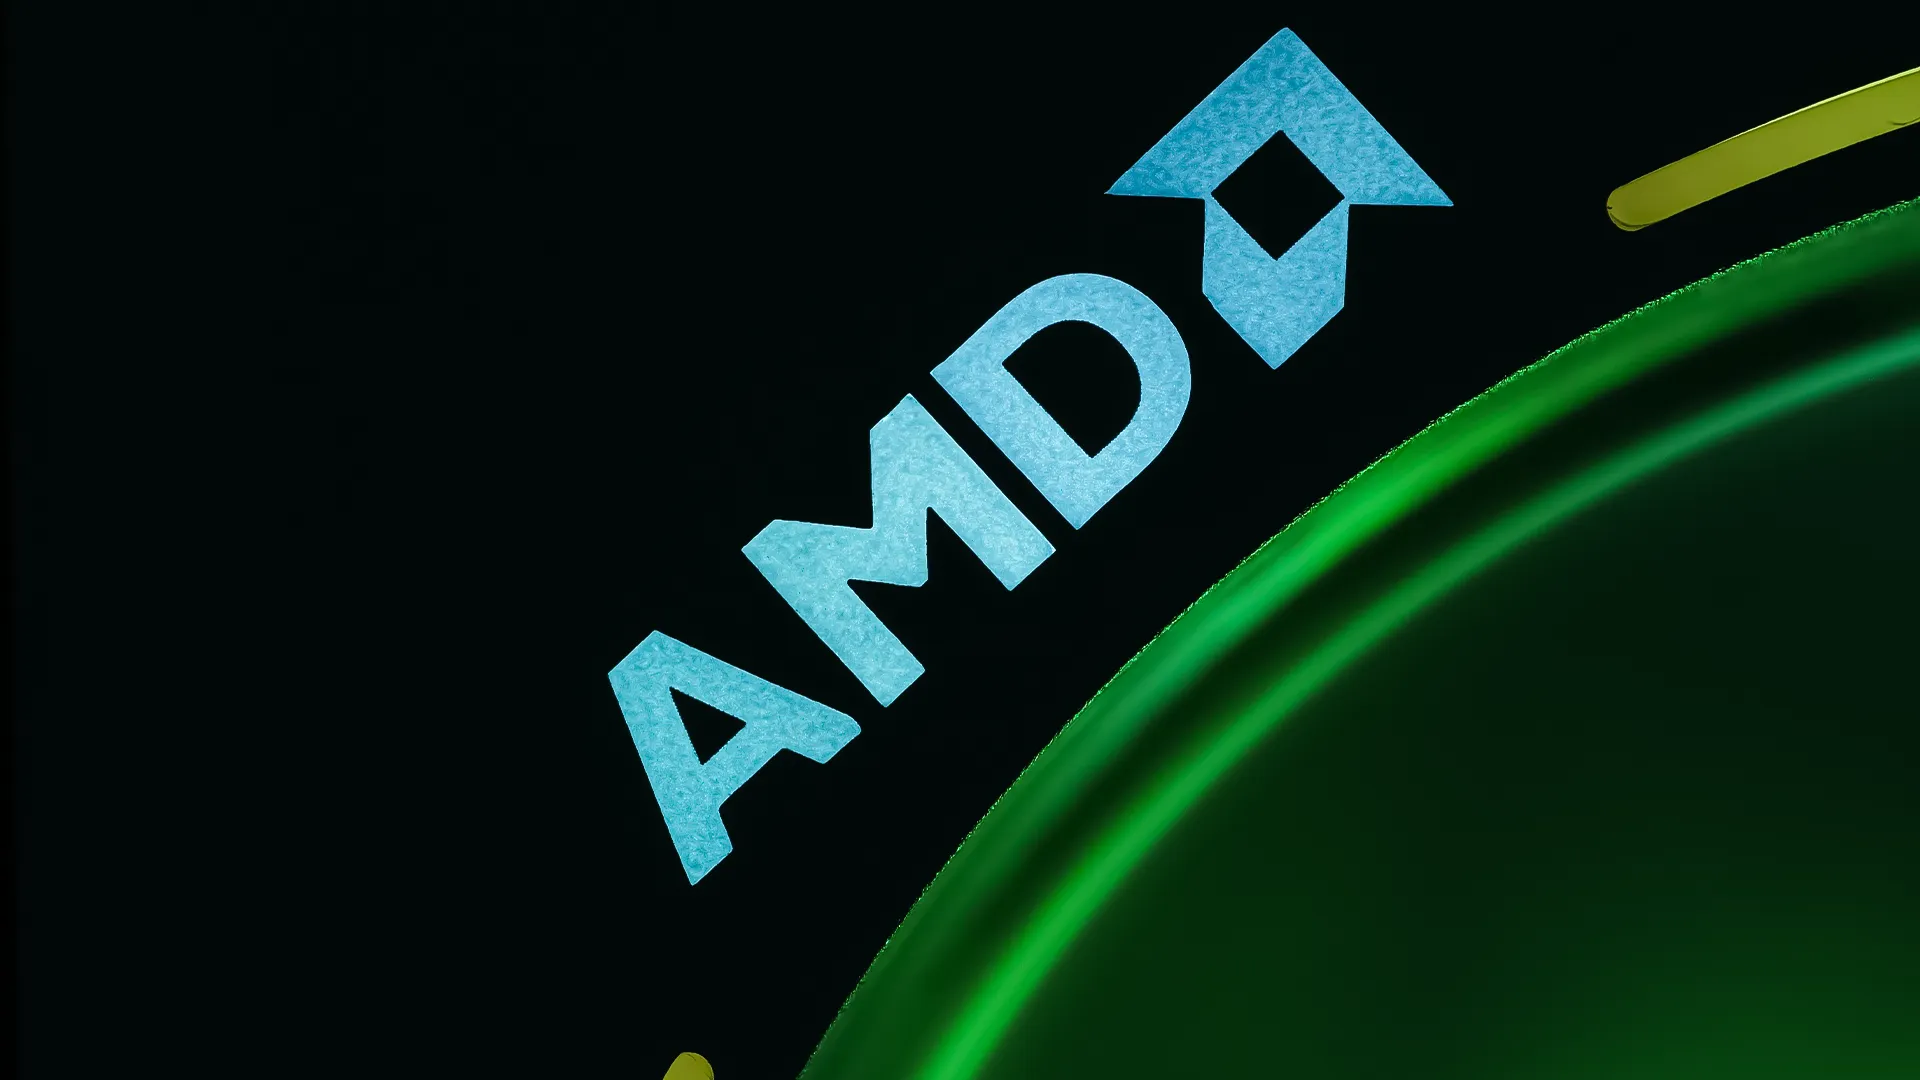 شرکت AMD